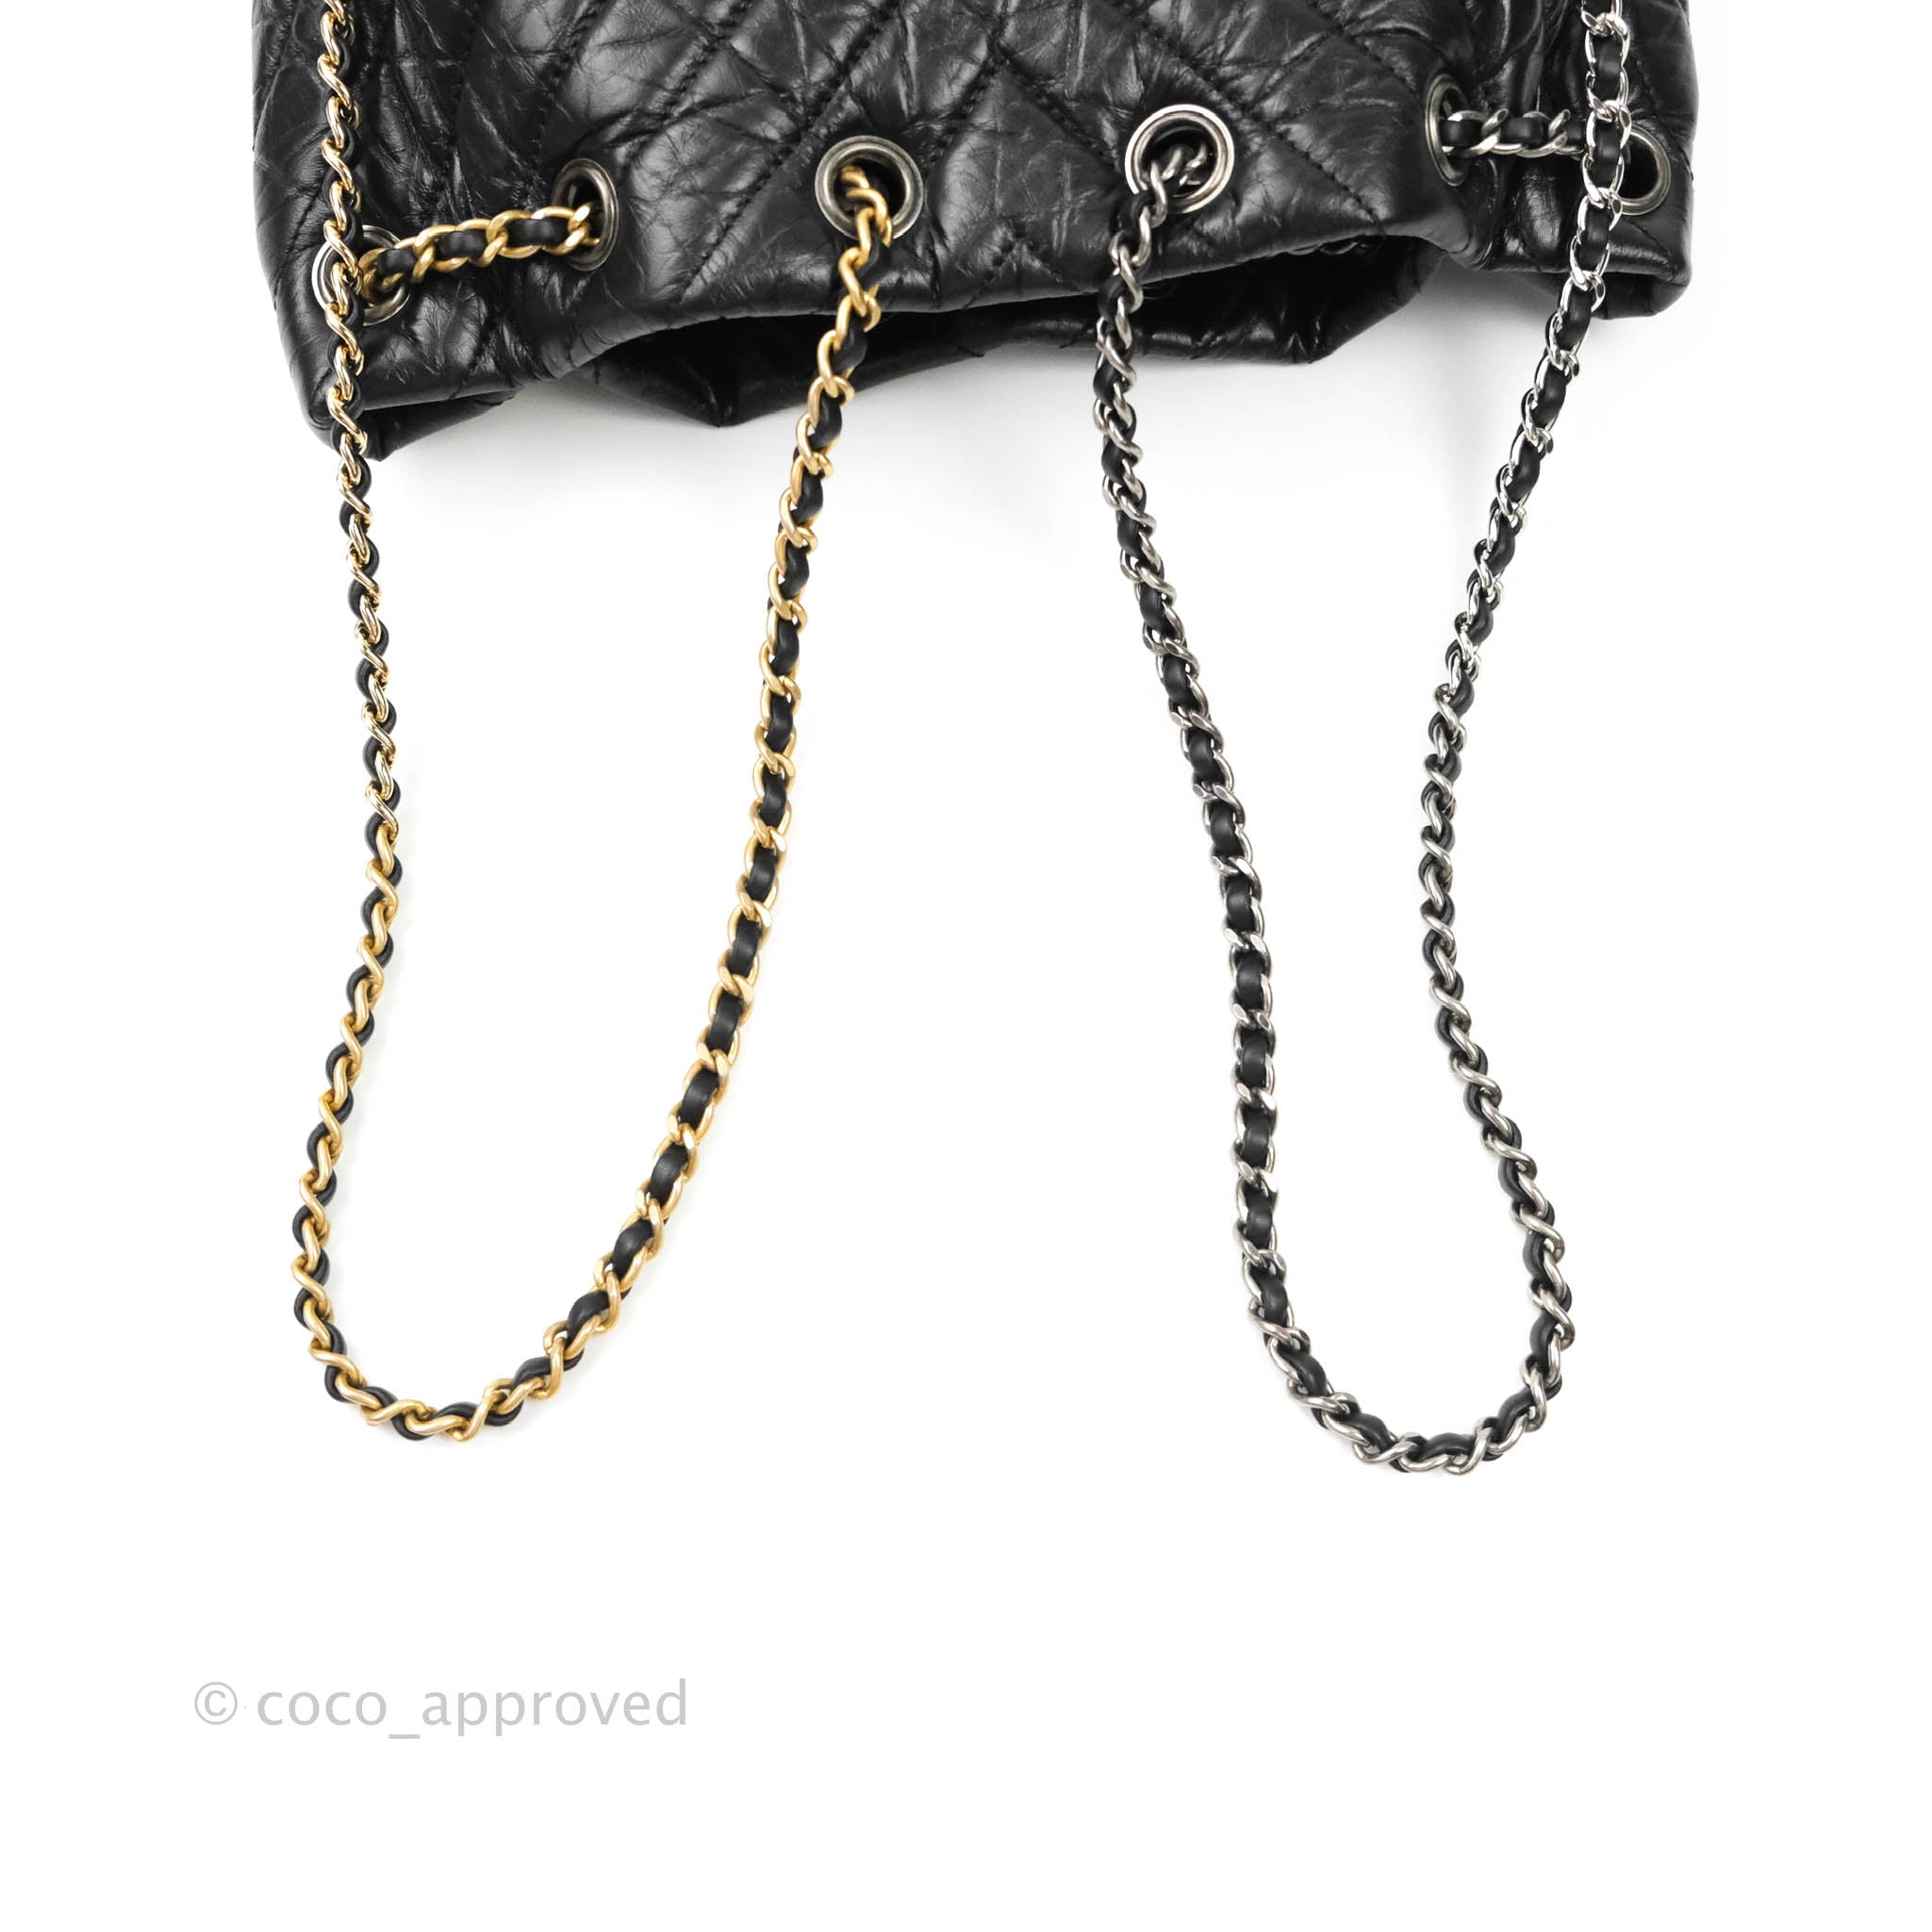 Chanel Small Chevron Gabrielle Backpack Black Aged Calfskin – Coco